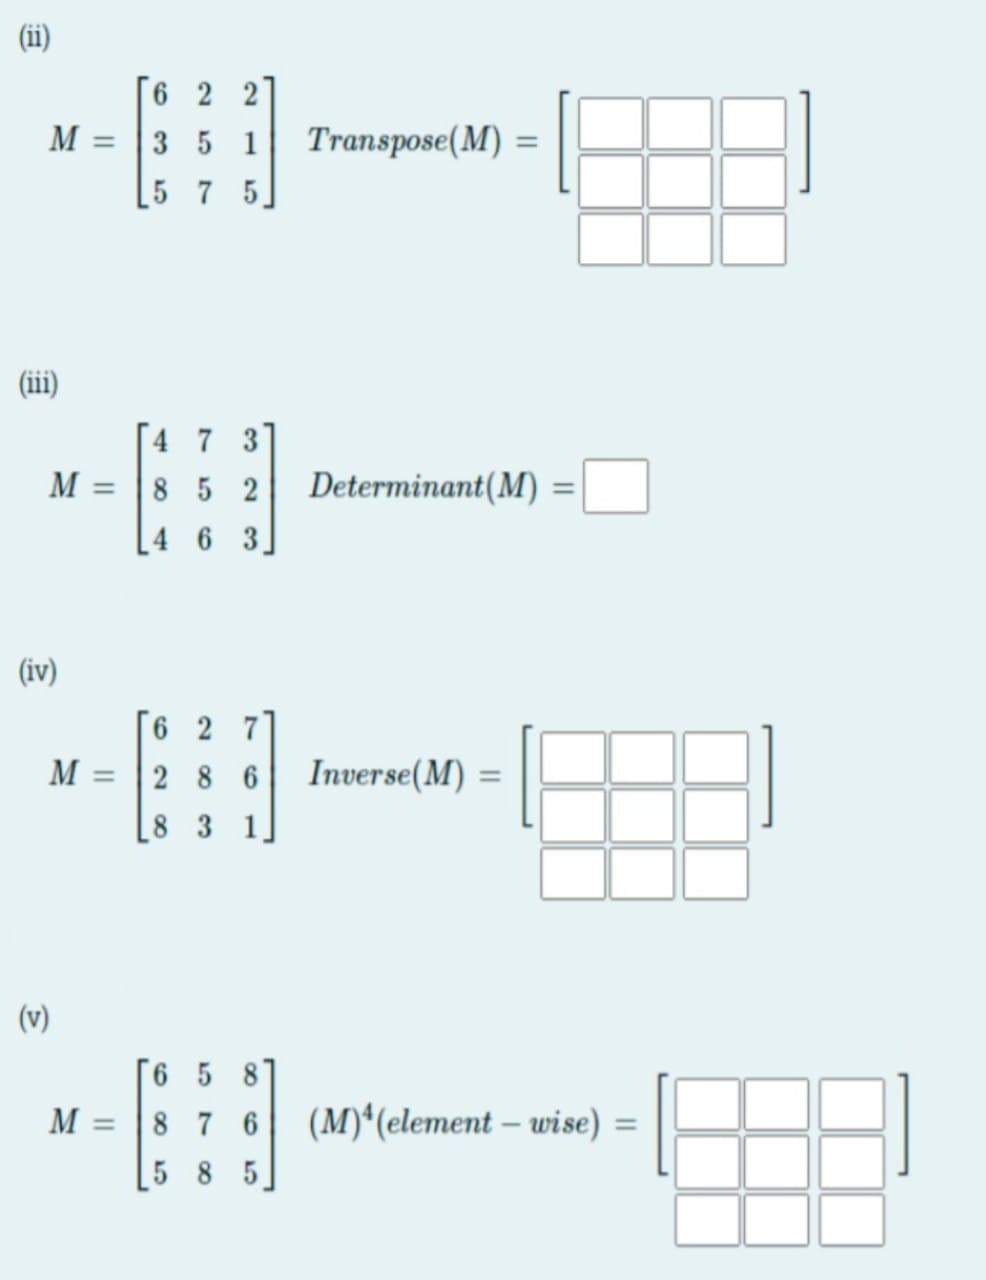 6 2 2]
M =
3 5 1
Transpose(M) =
%3D
5 7 5.
(iii)
[4 7 3
M =
8 5 2
Determinant(M)
%3D
[4 6 3.
(iv)
6 2 7
M =
2 8 6
Inverse(M) =
8 3 1
(v)
6 5 8
M =
8 7 6
(M)*(element – wise) =
%3D
5 8 5
